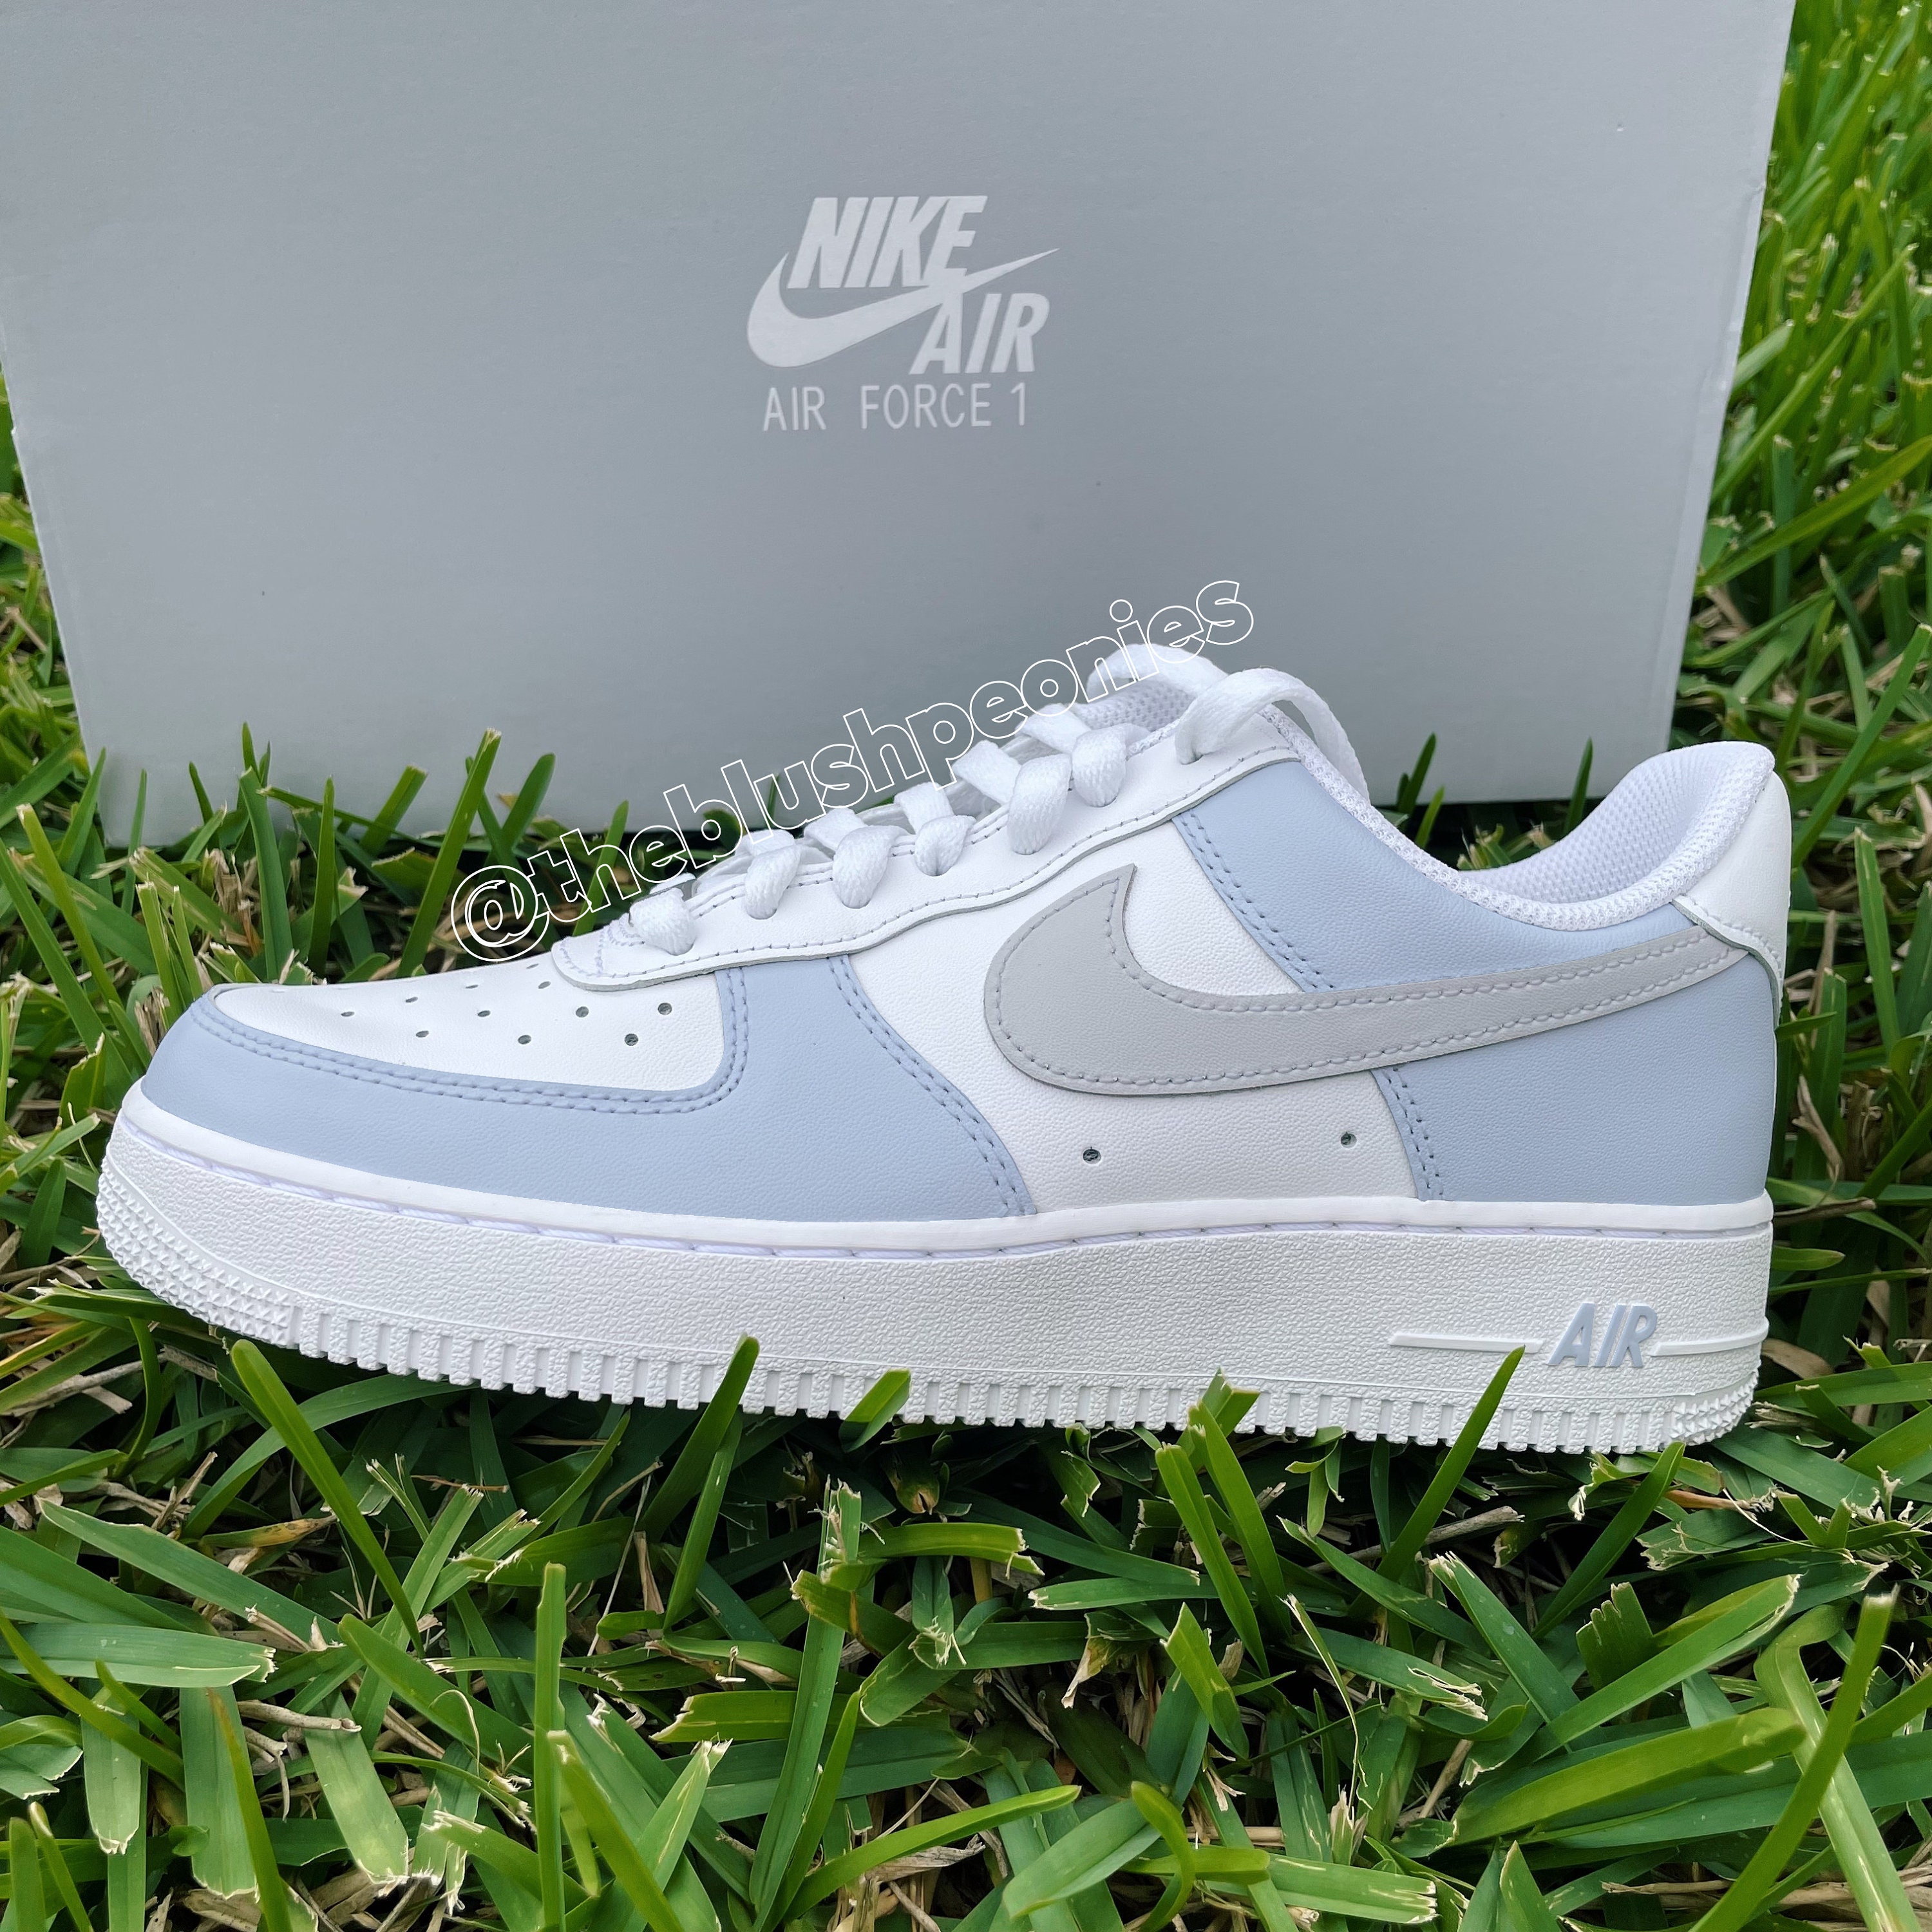 Nike Air Force 1 Low Custom Gray Swoosh AF1 Unisex Shoes for Men